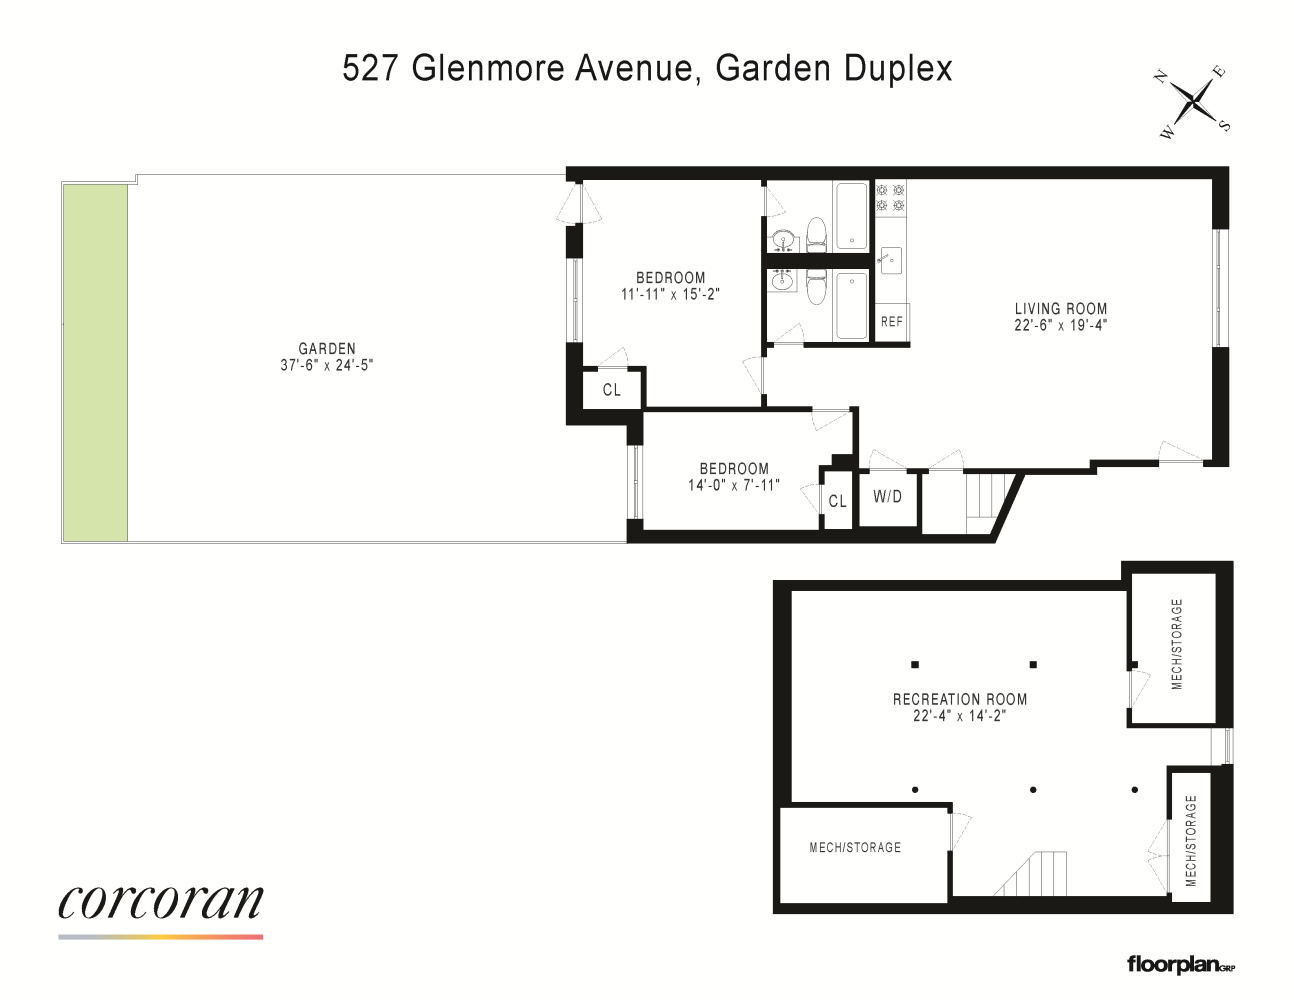 Floorplan for 527 Glenmore Avenue, 1